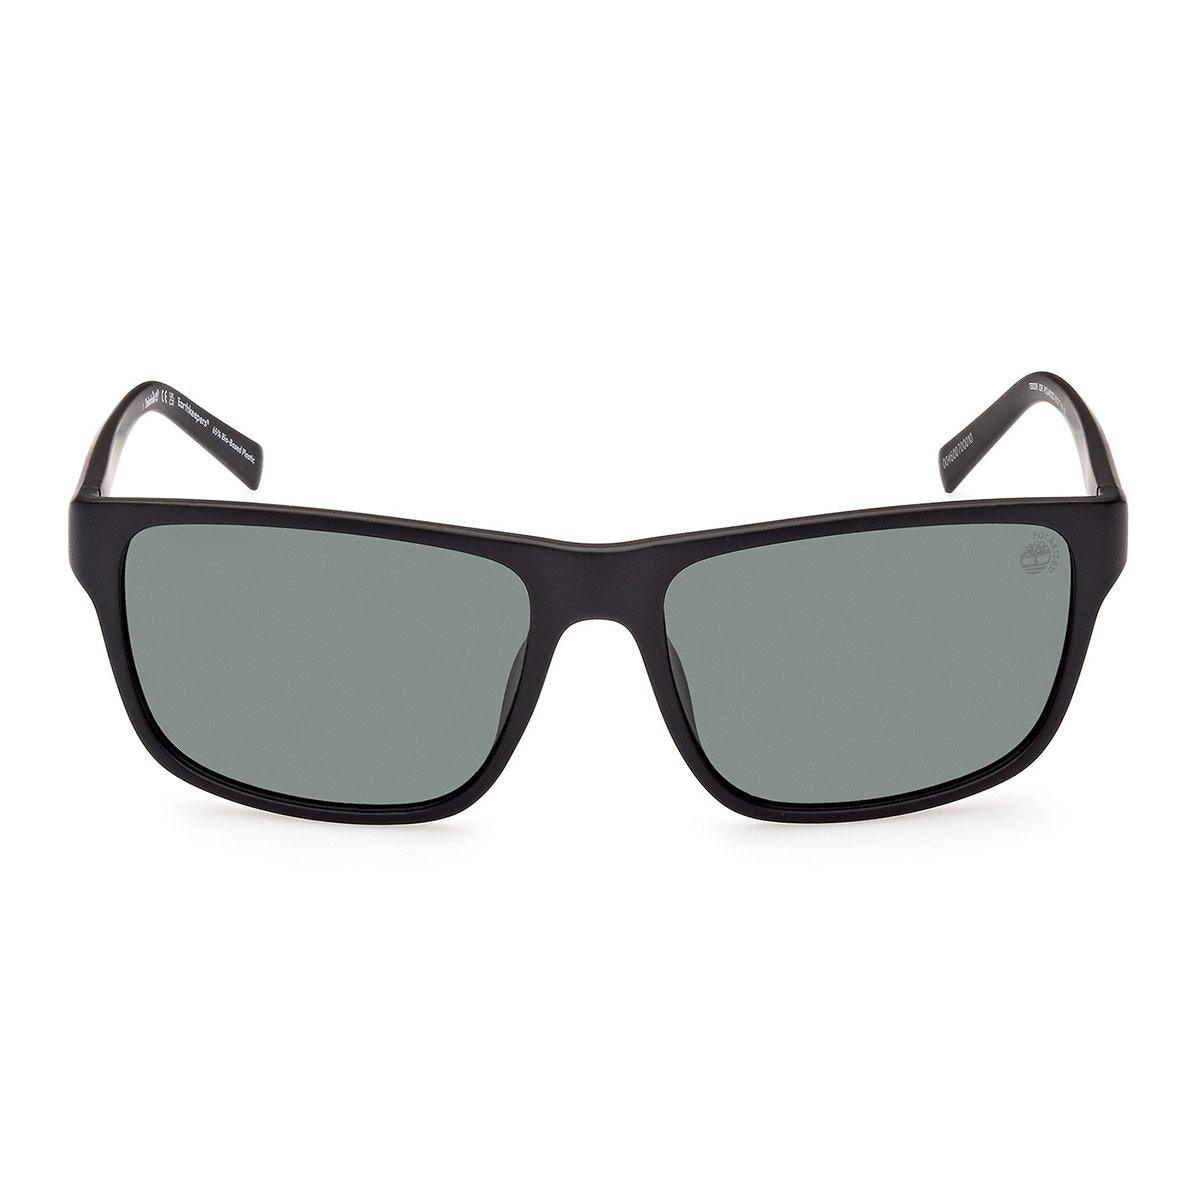 Timberland Sunglasses In Gray